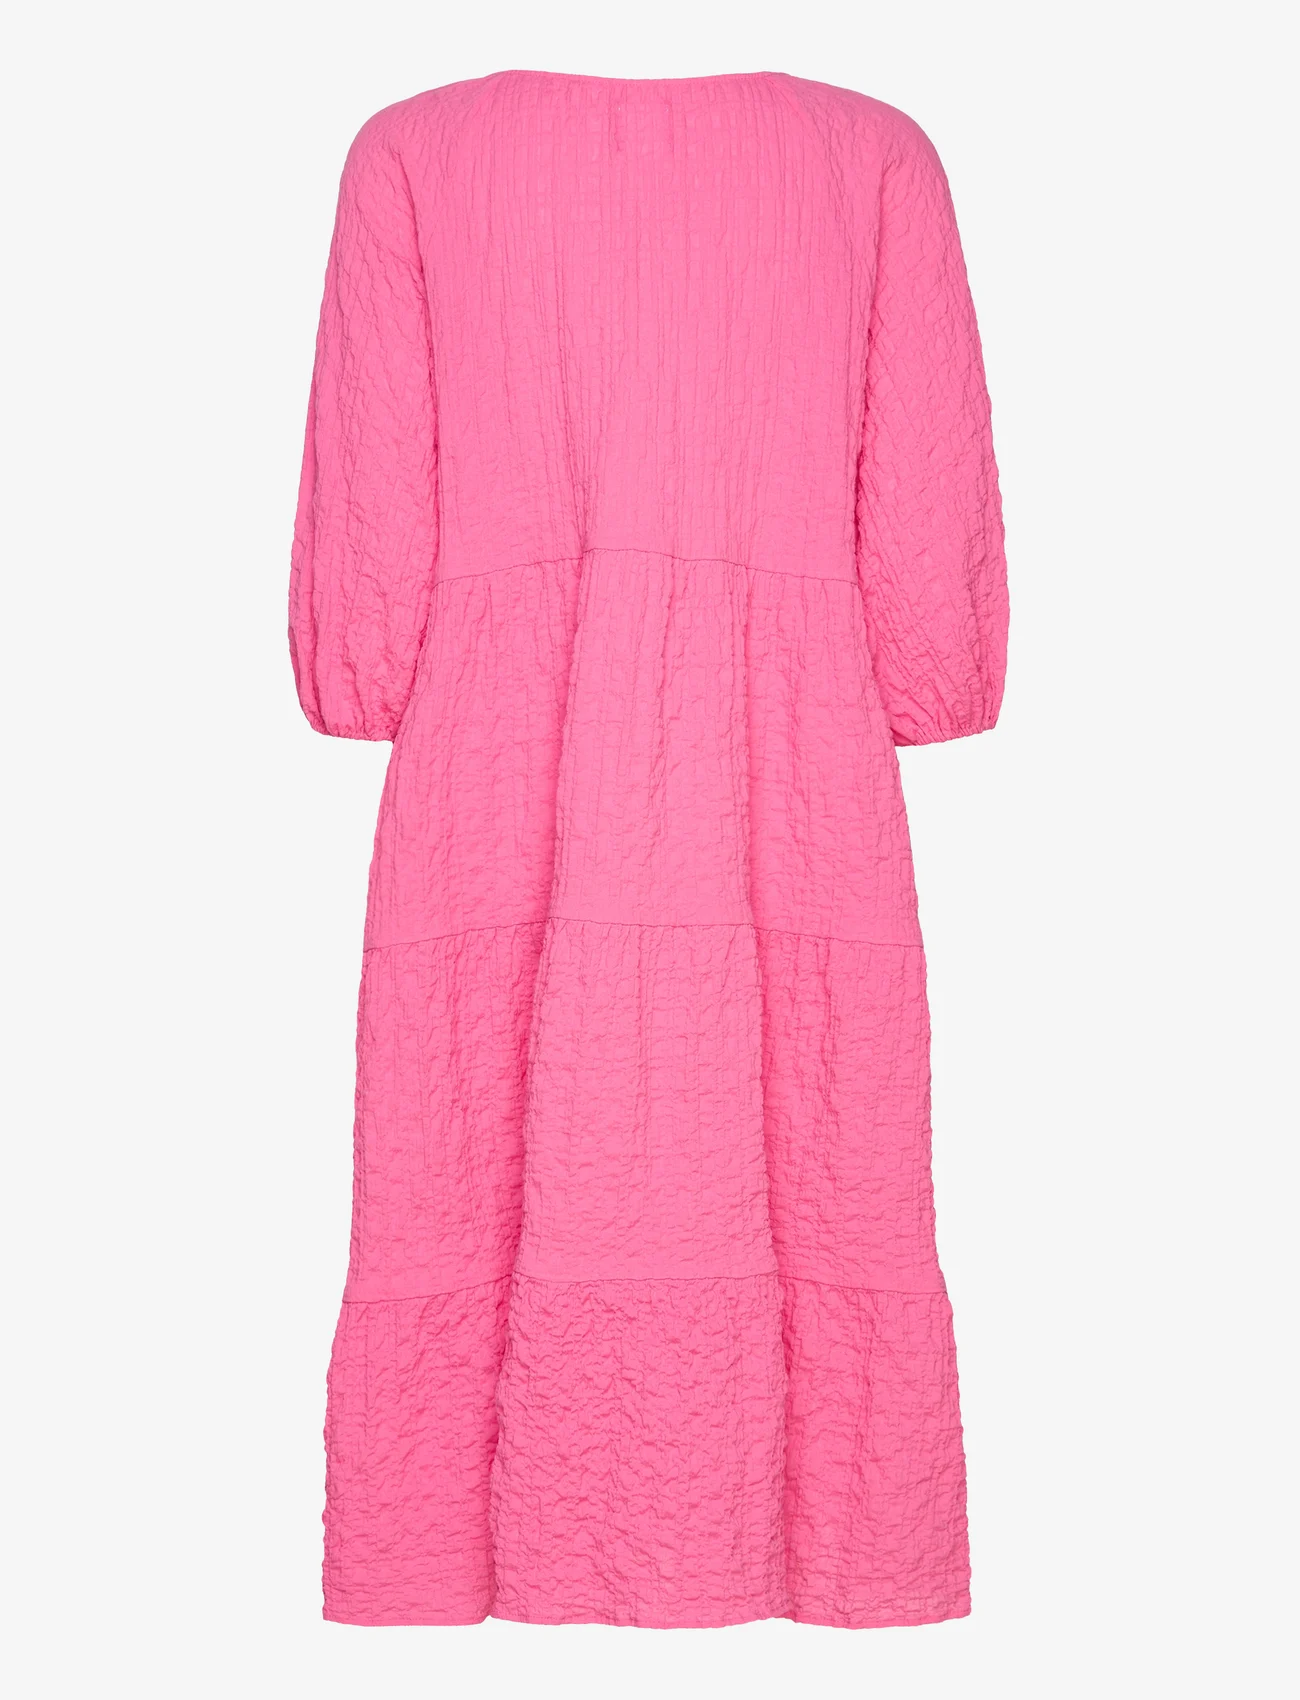 hálo - KAJO crinkled midi dress - feestelijke kleding voor outlet-prijzen - pink - 1